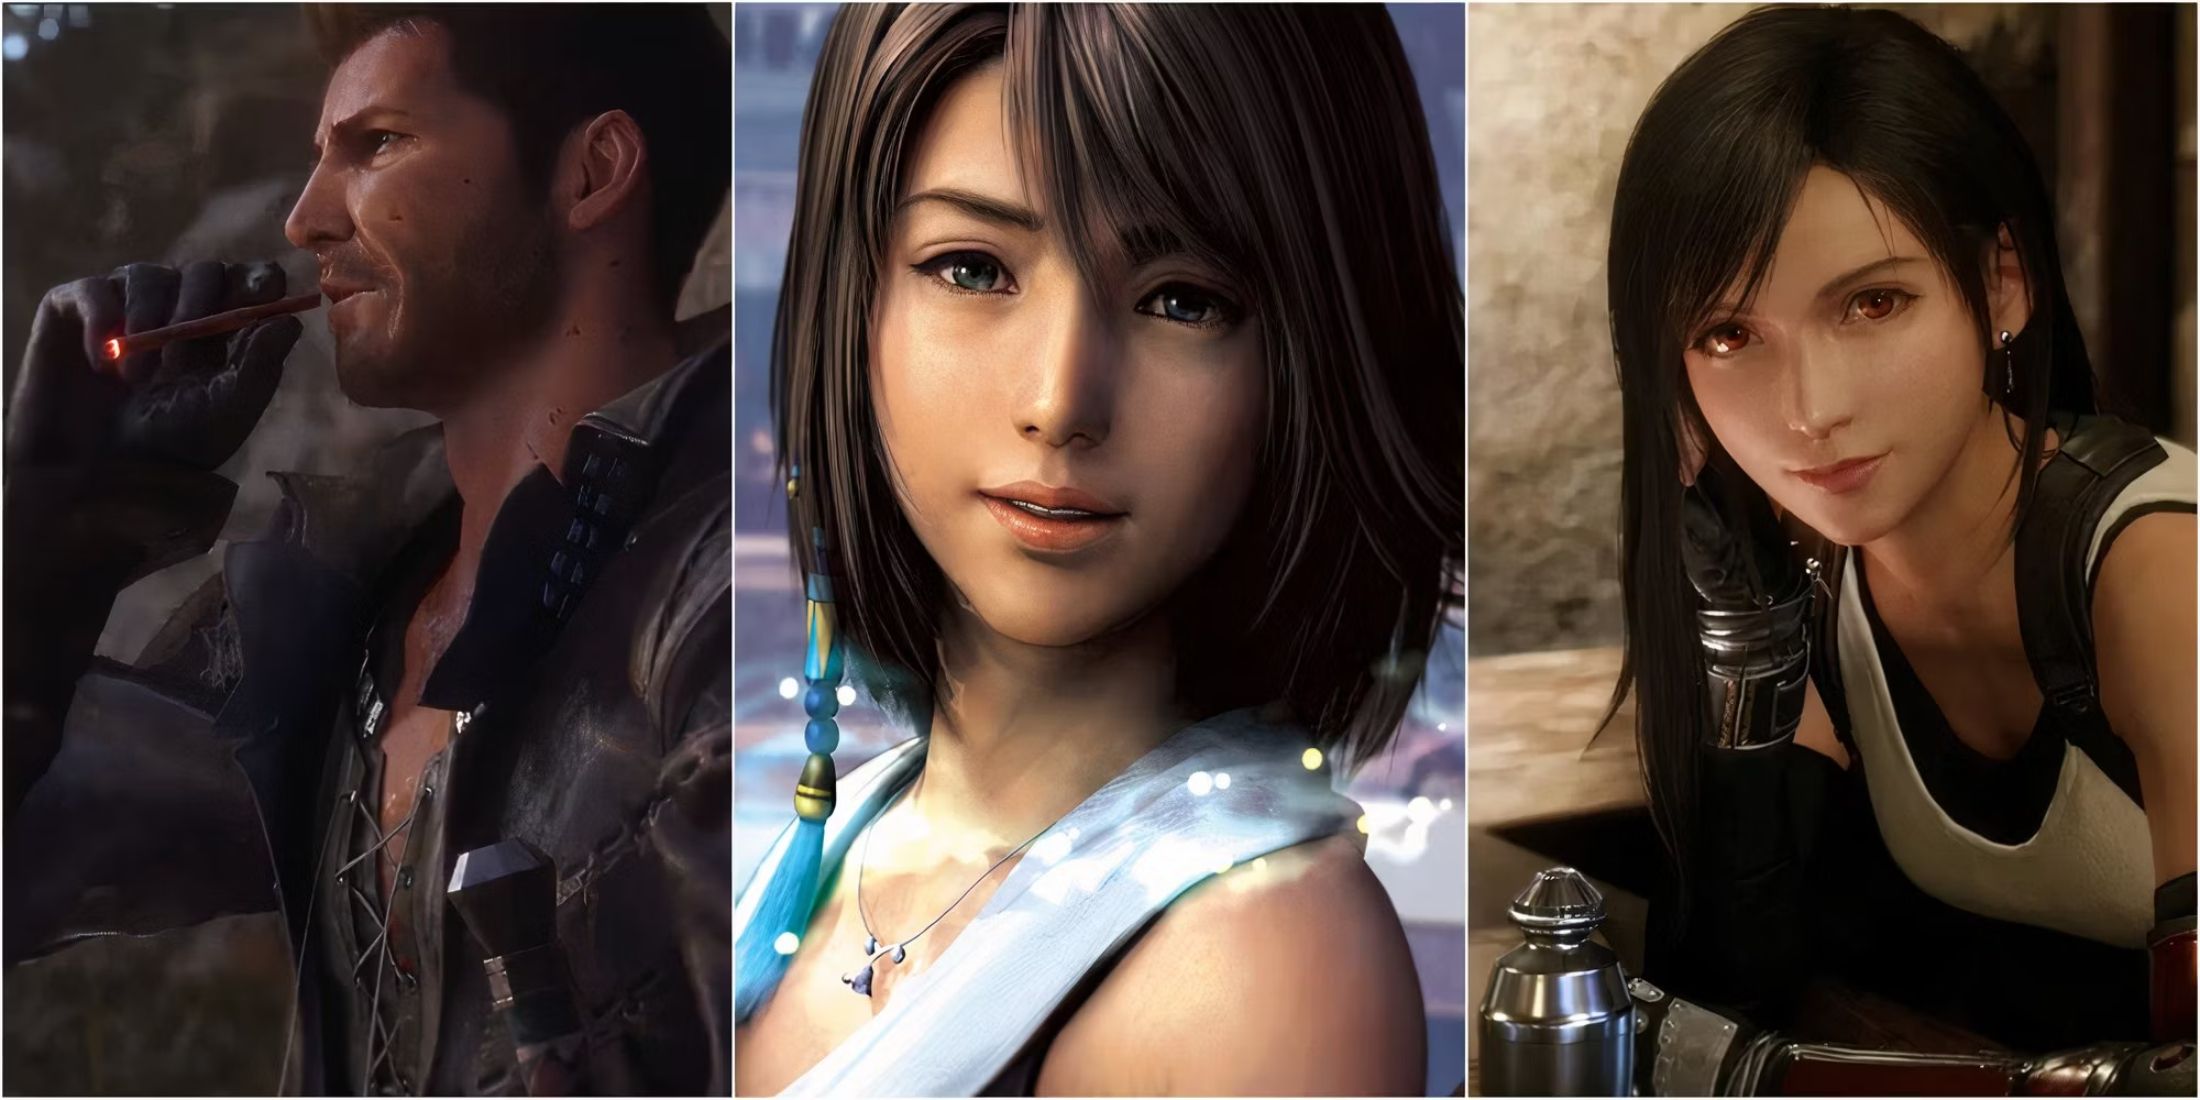 Cid from Final Fantasy 16, Yuna from Final Fantasy 10, and Tifa from Final Fantasy 7 Remake